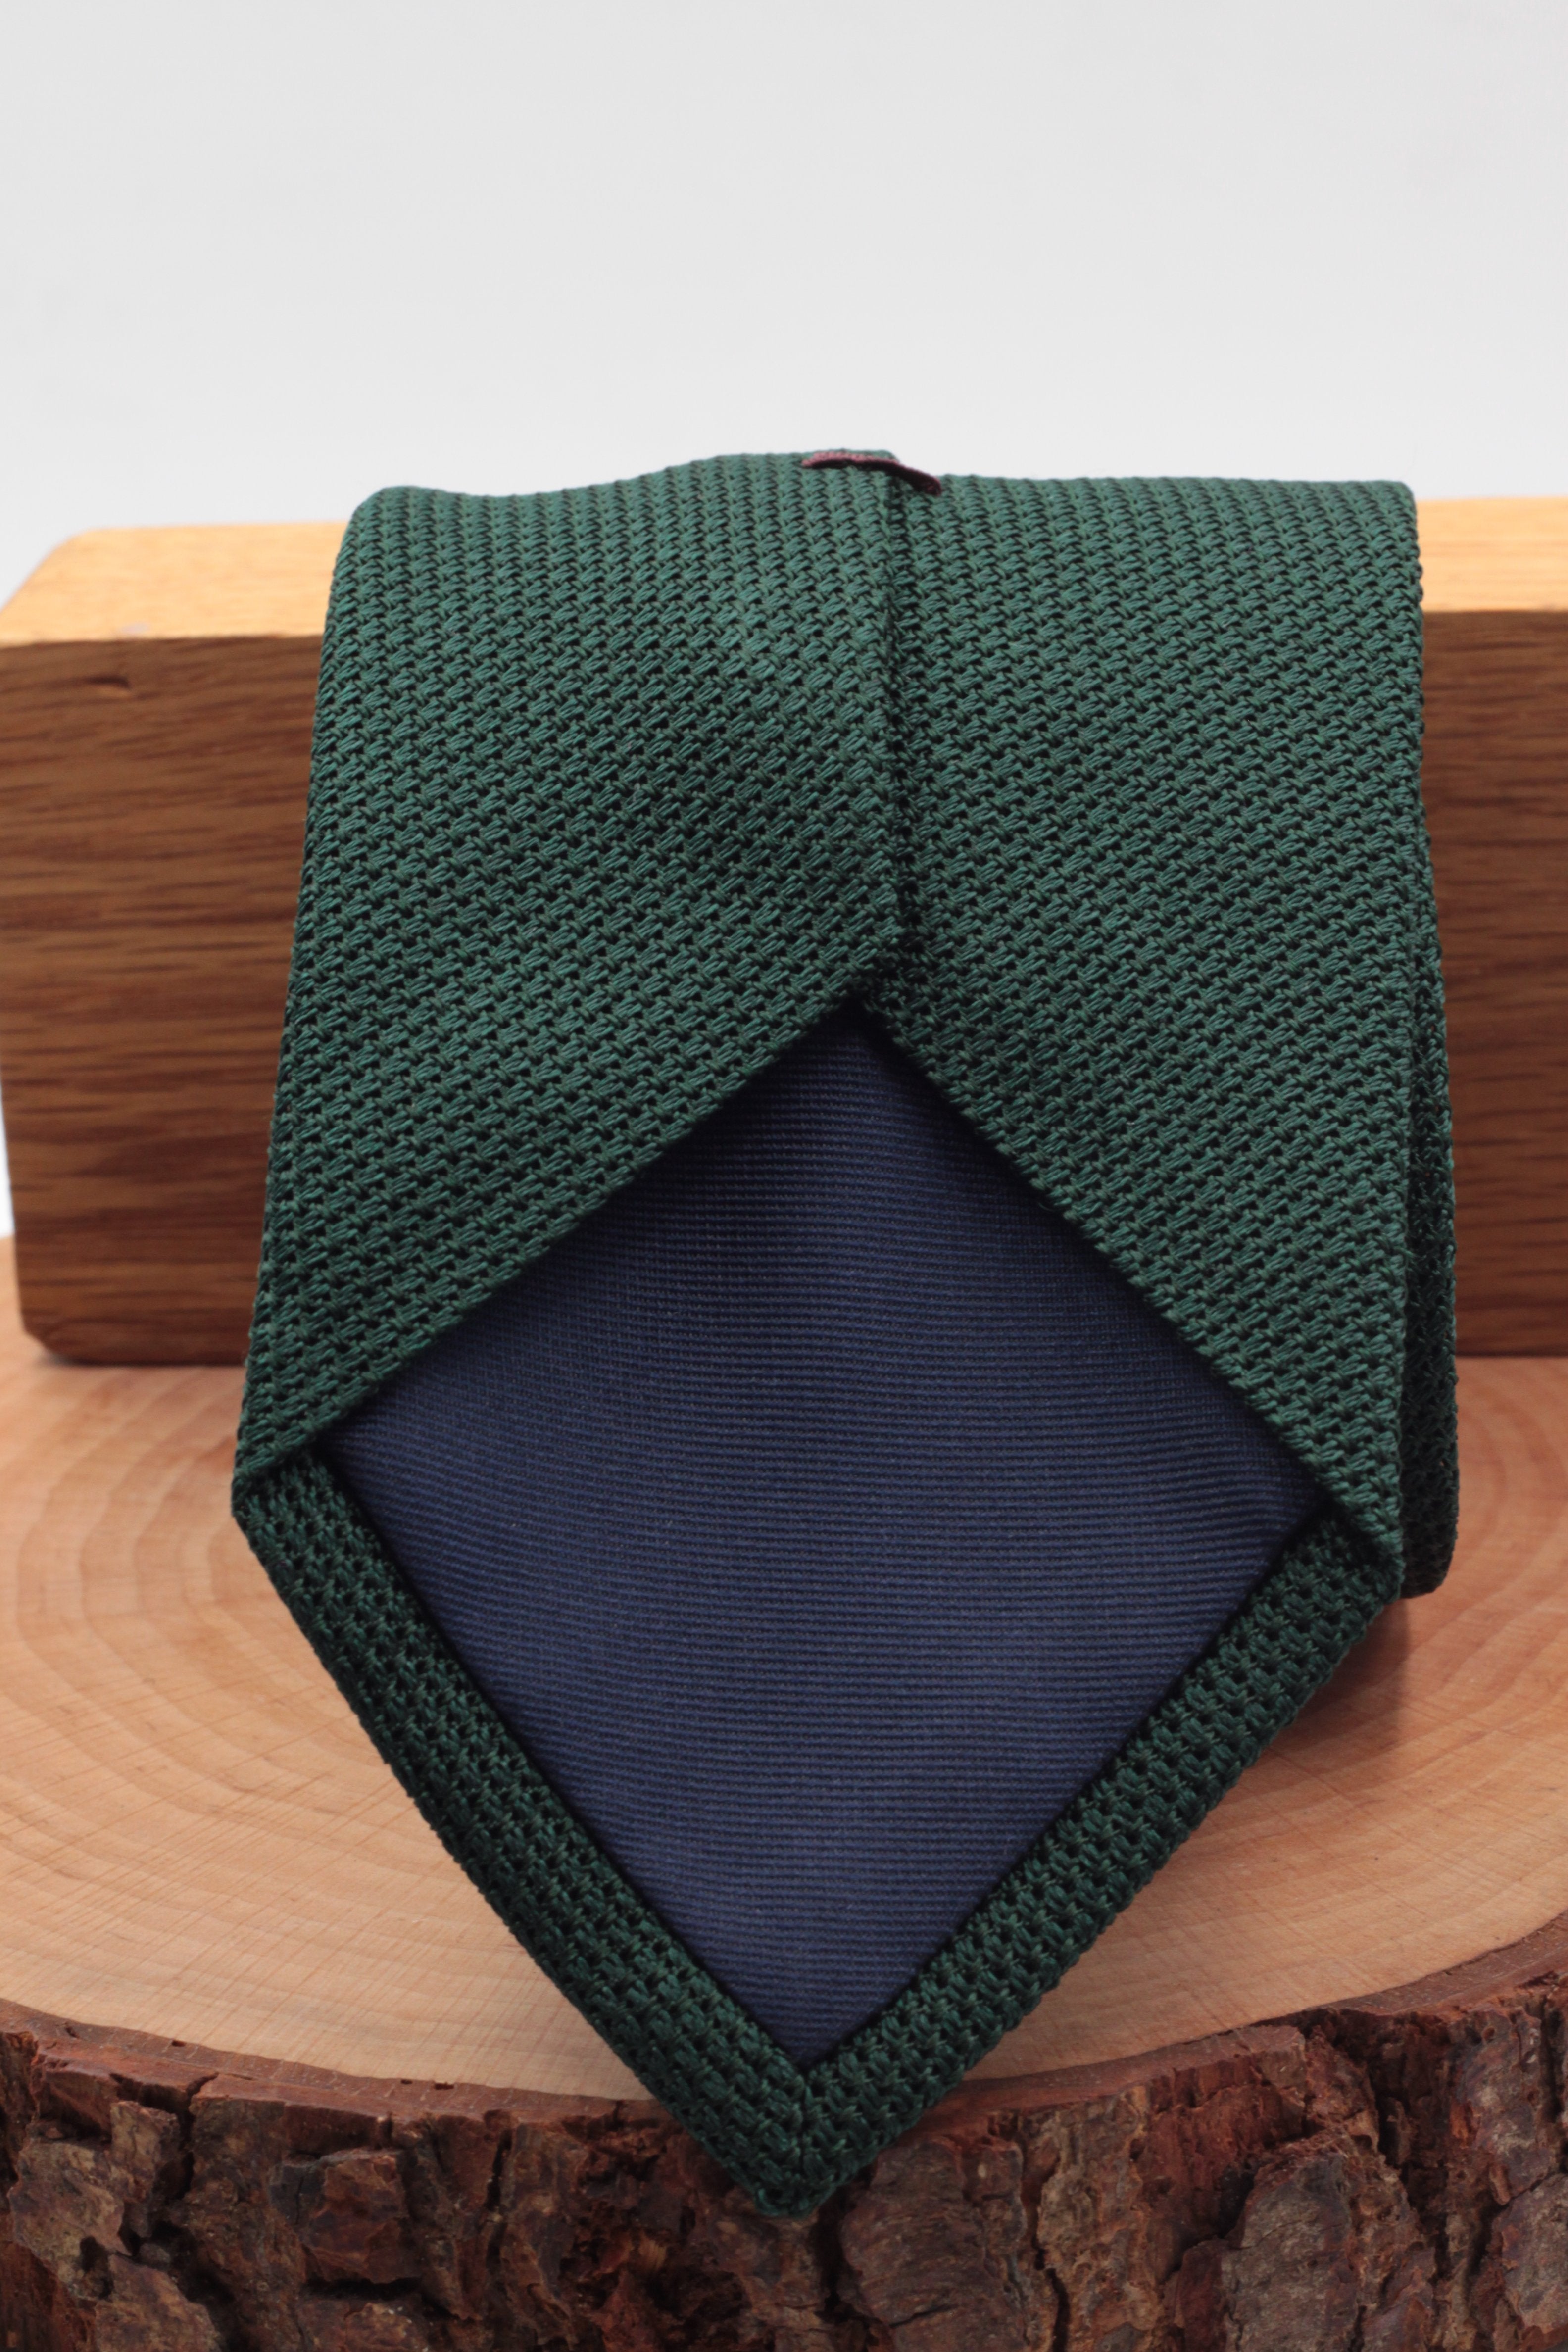 100% Silk Grenadine garza fina  Tipped Hand rolled blades Forrest green plain tie Handmade in Rome, Italy 8 cm x 150 cm